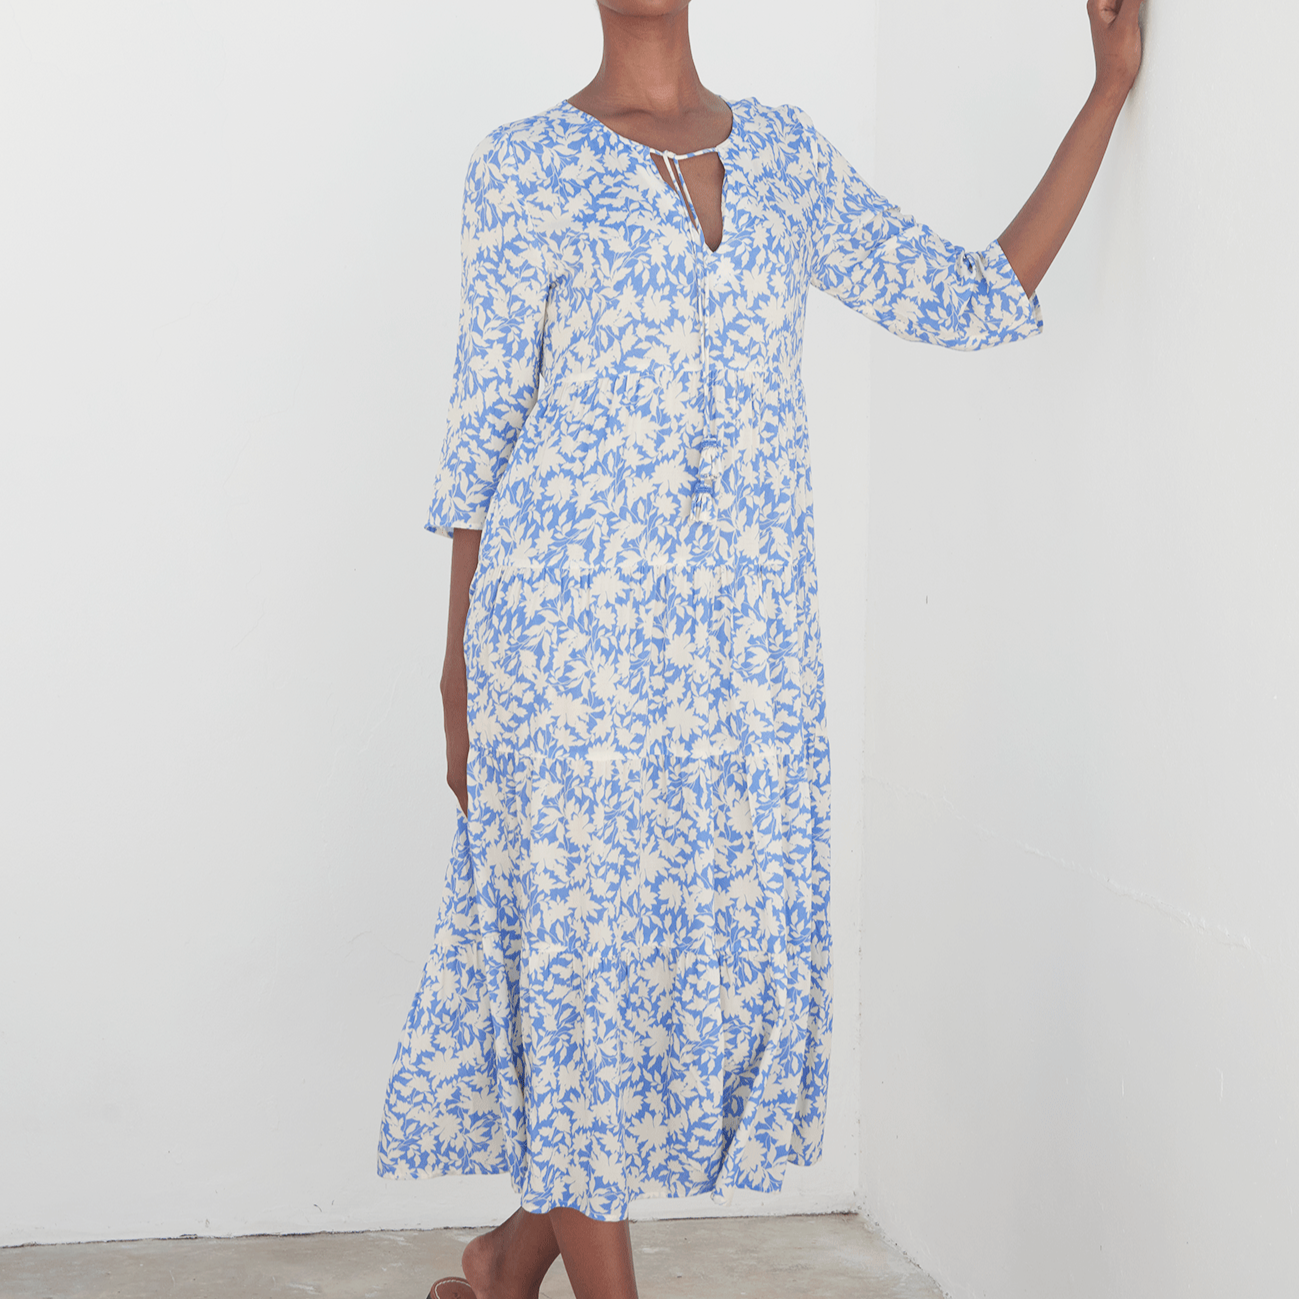 Aspiga Emma Midi Dress in Cheetah Cream/Blue